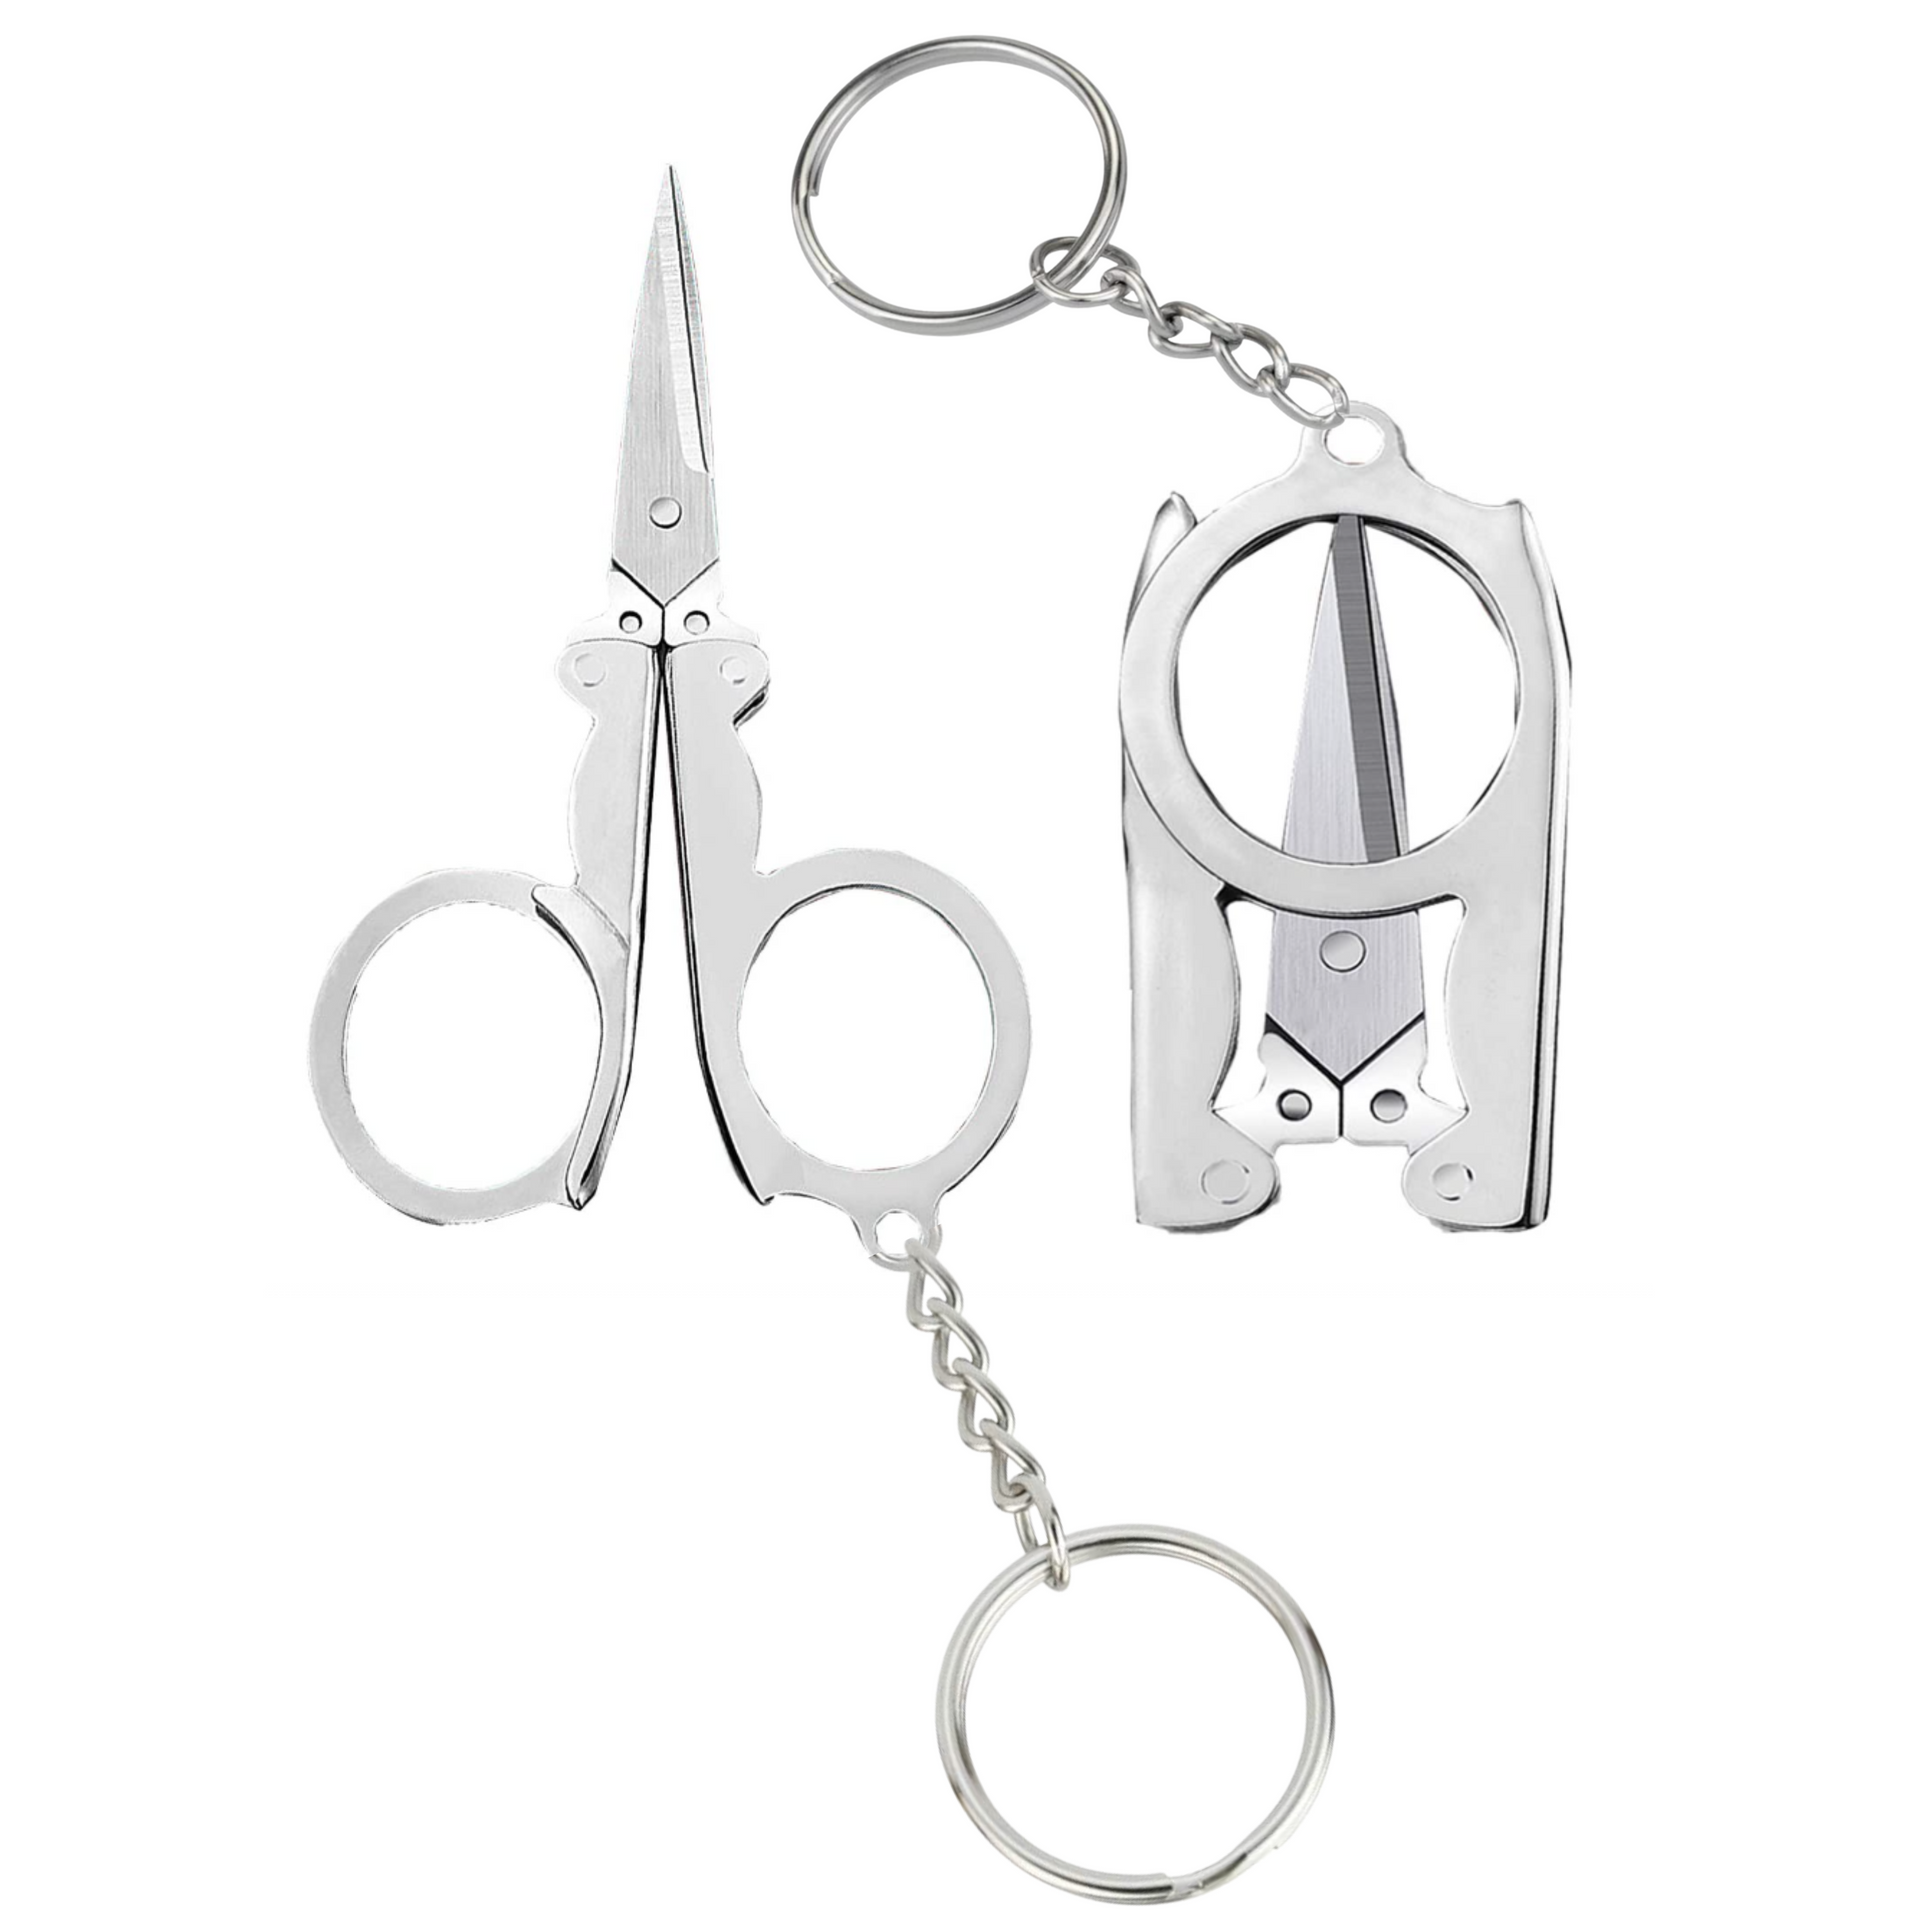 Folding Scissors With Key Chain